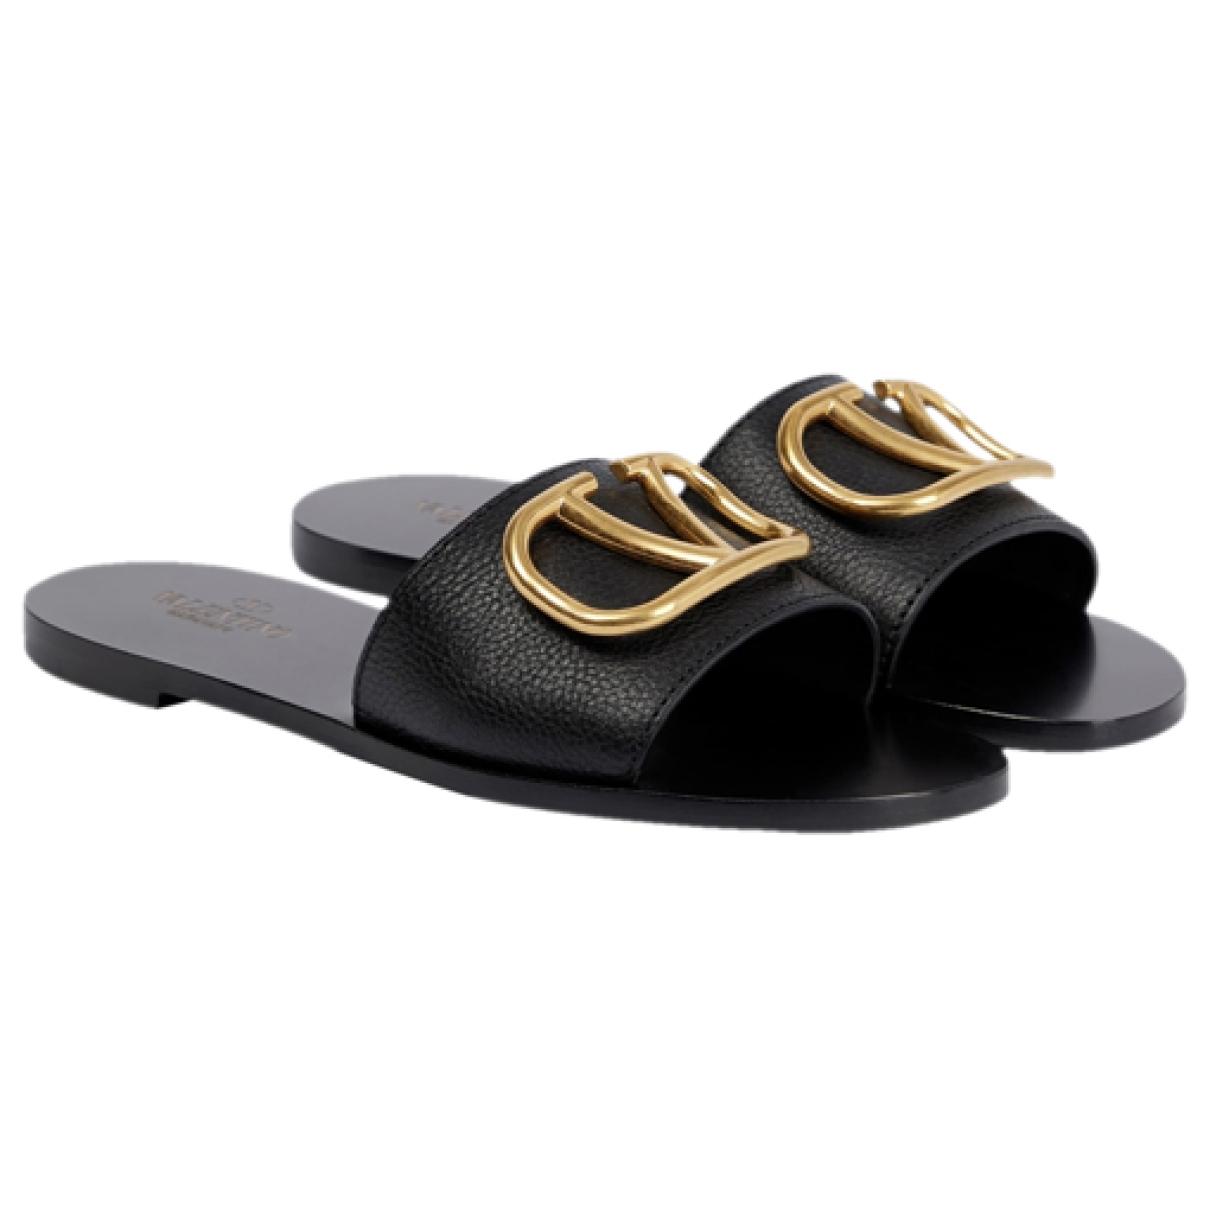 VLogo leather sandal - 1